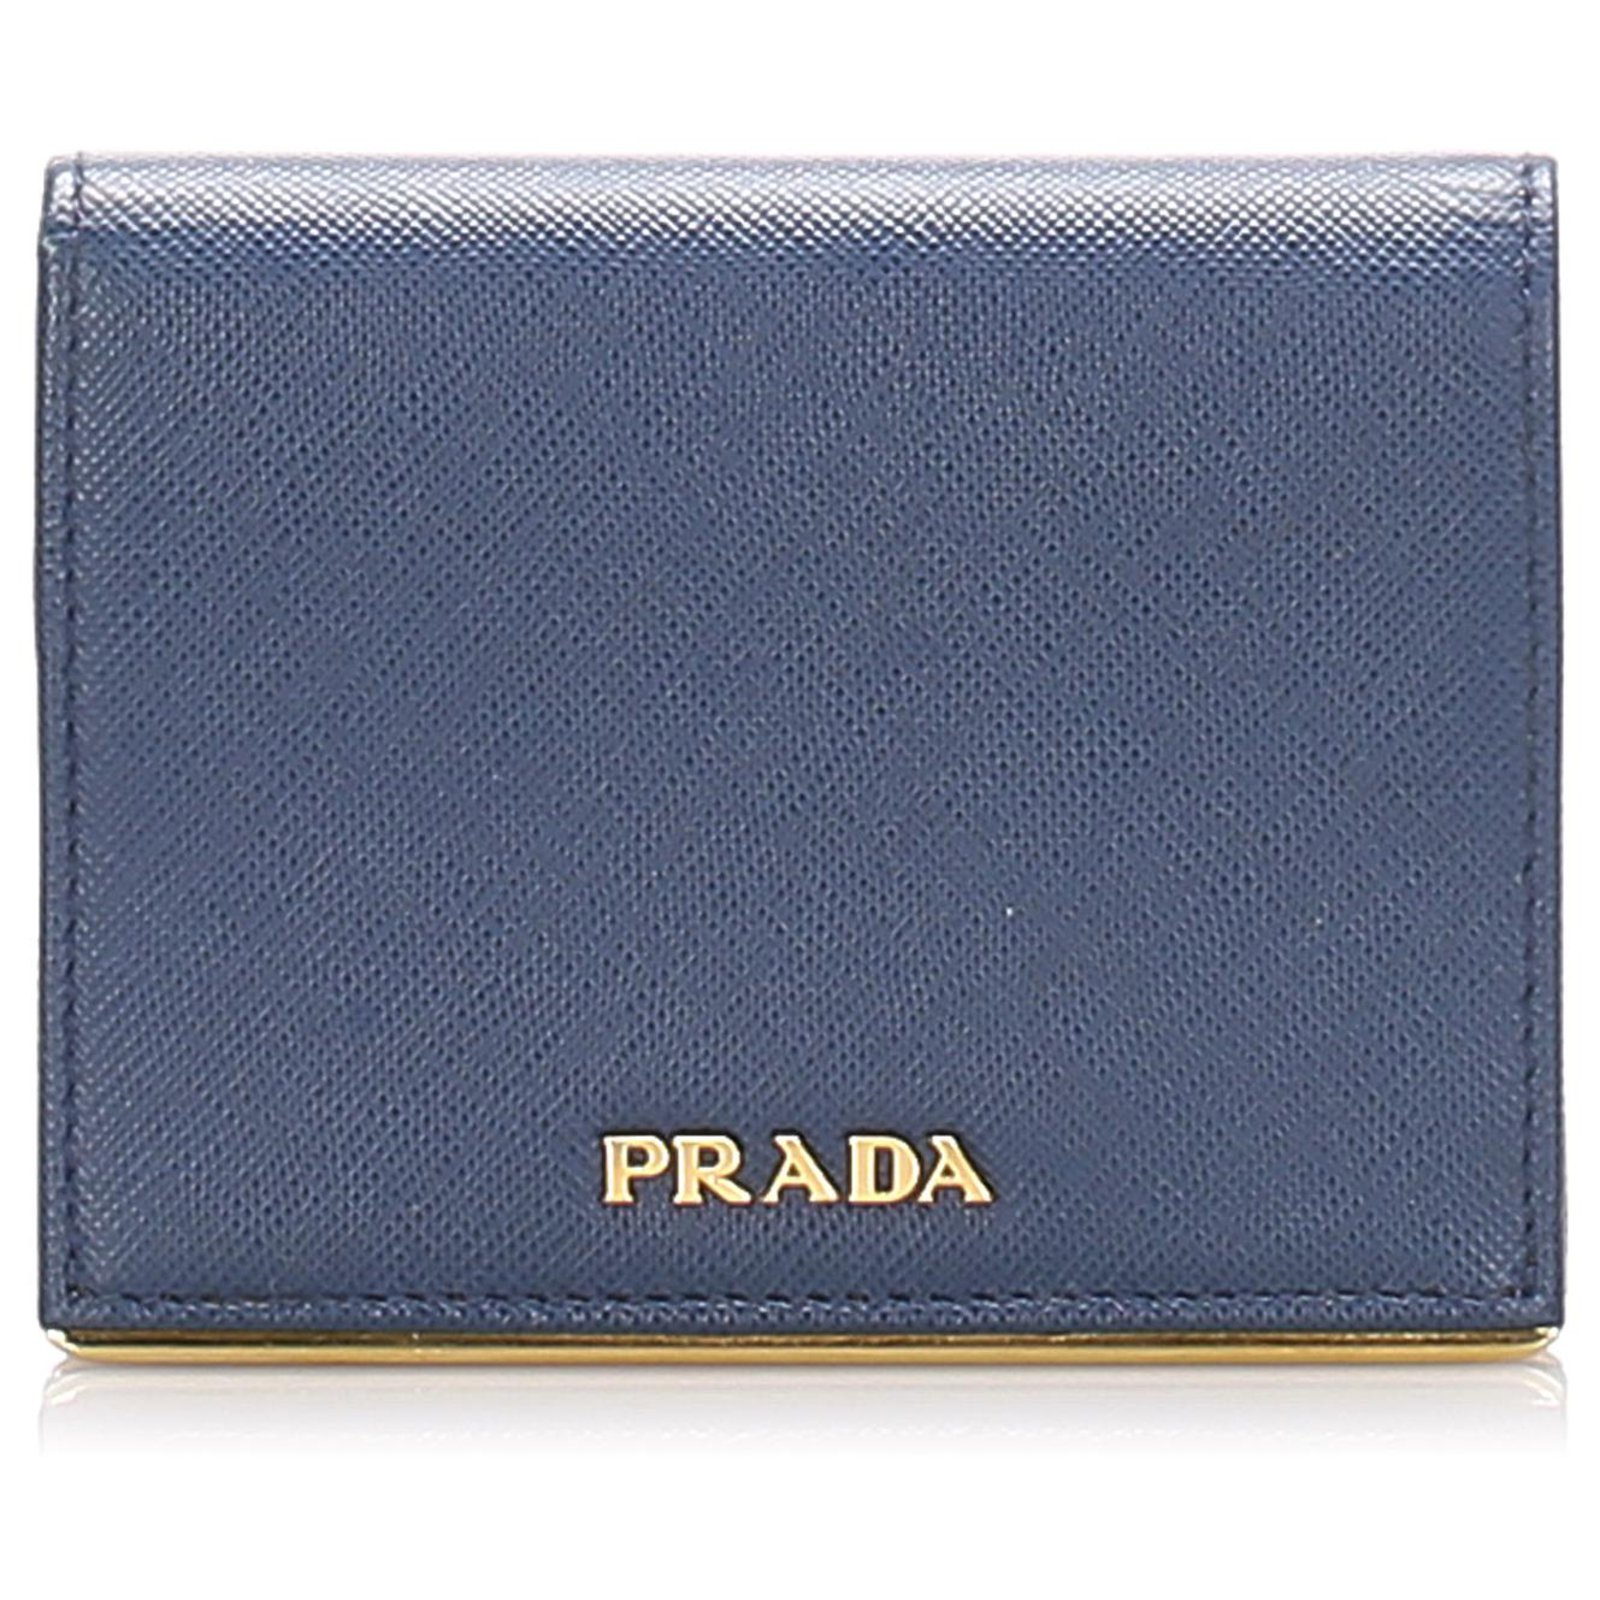 Prada Saffiano Leather Bi-Fold Wallet